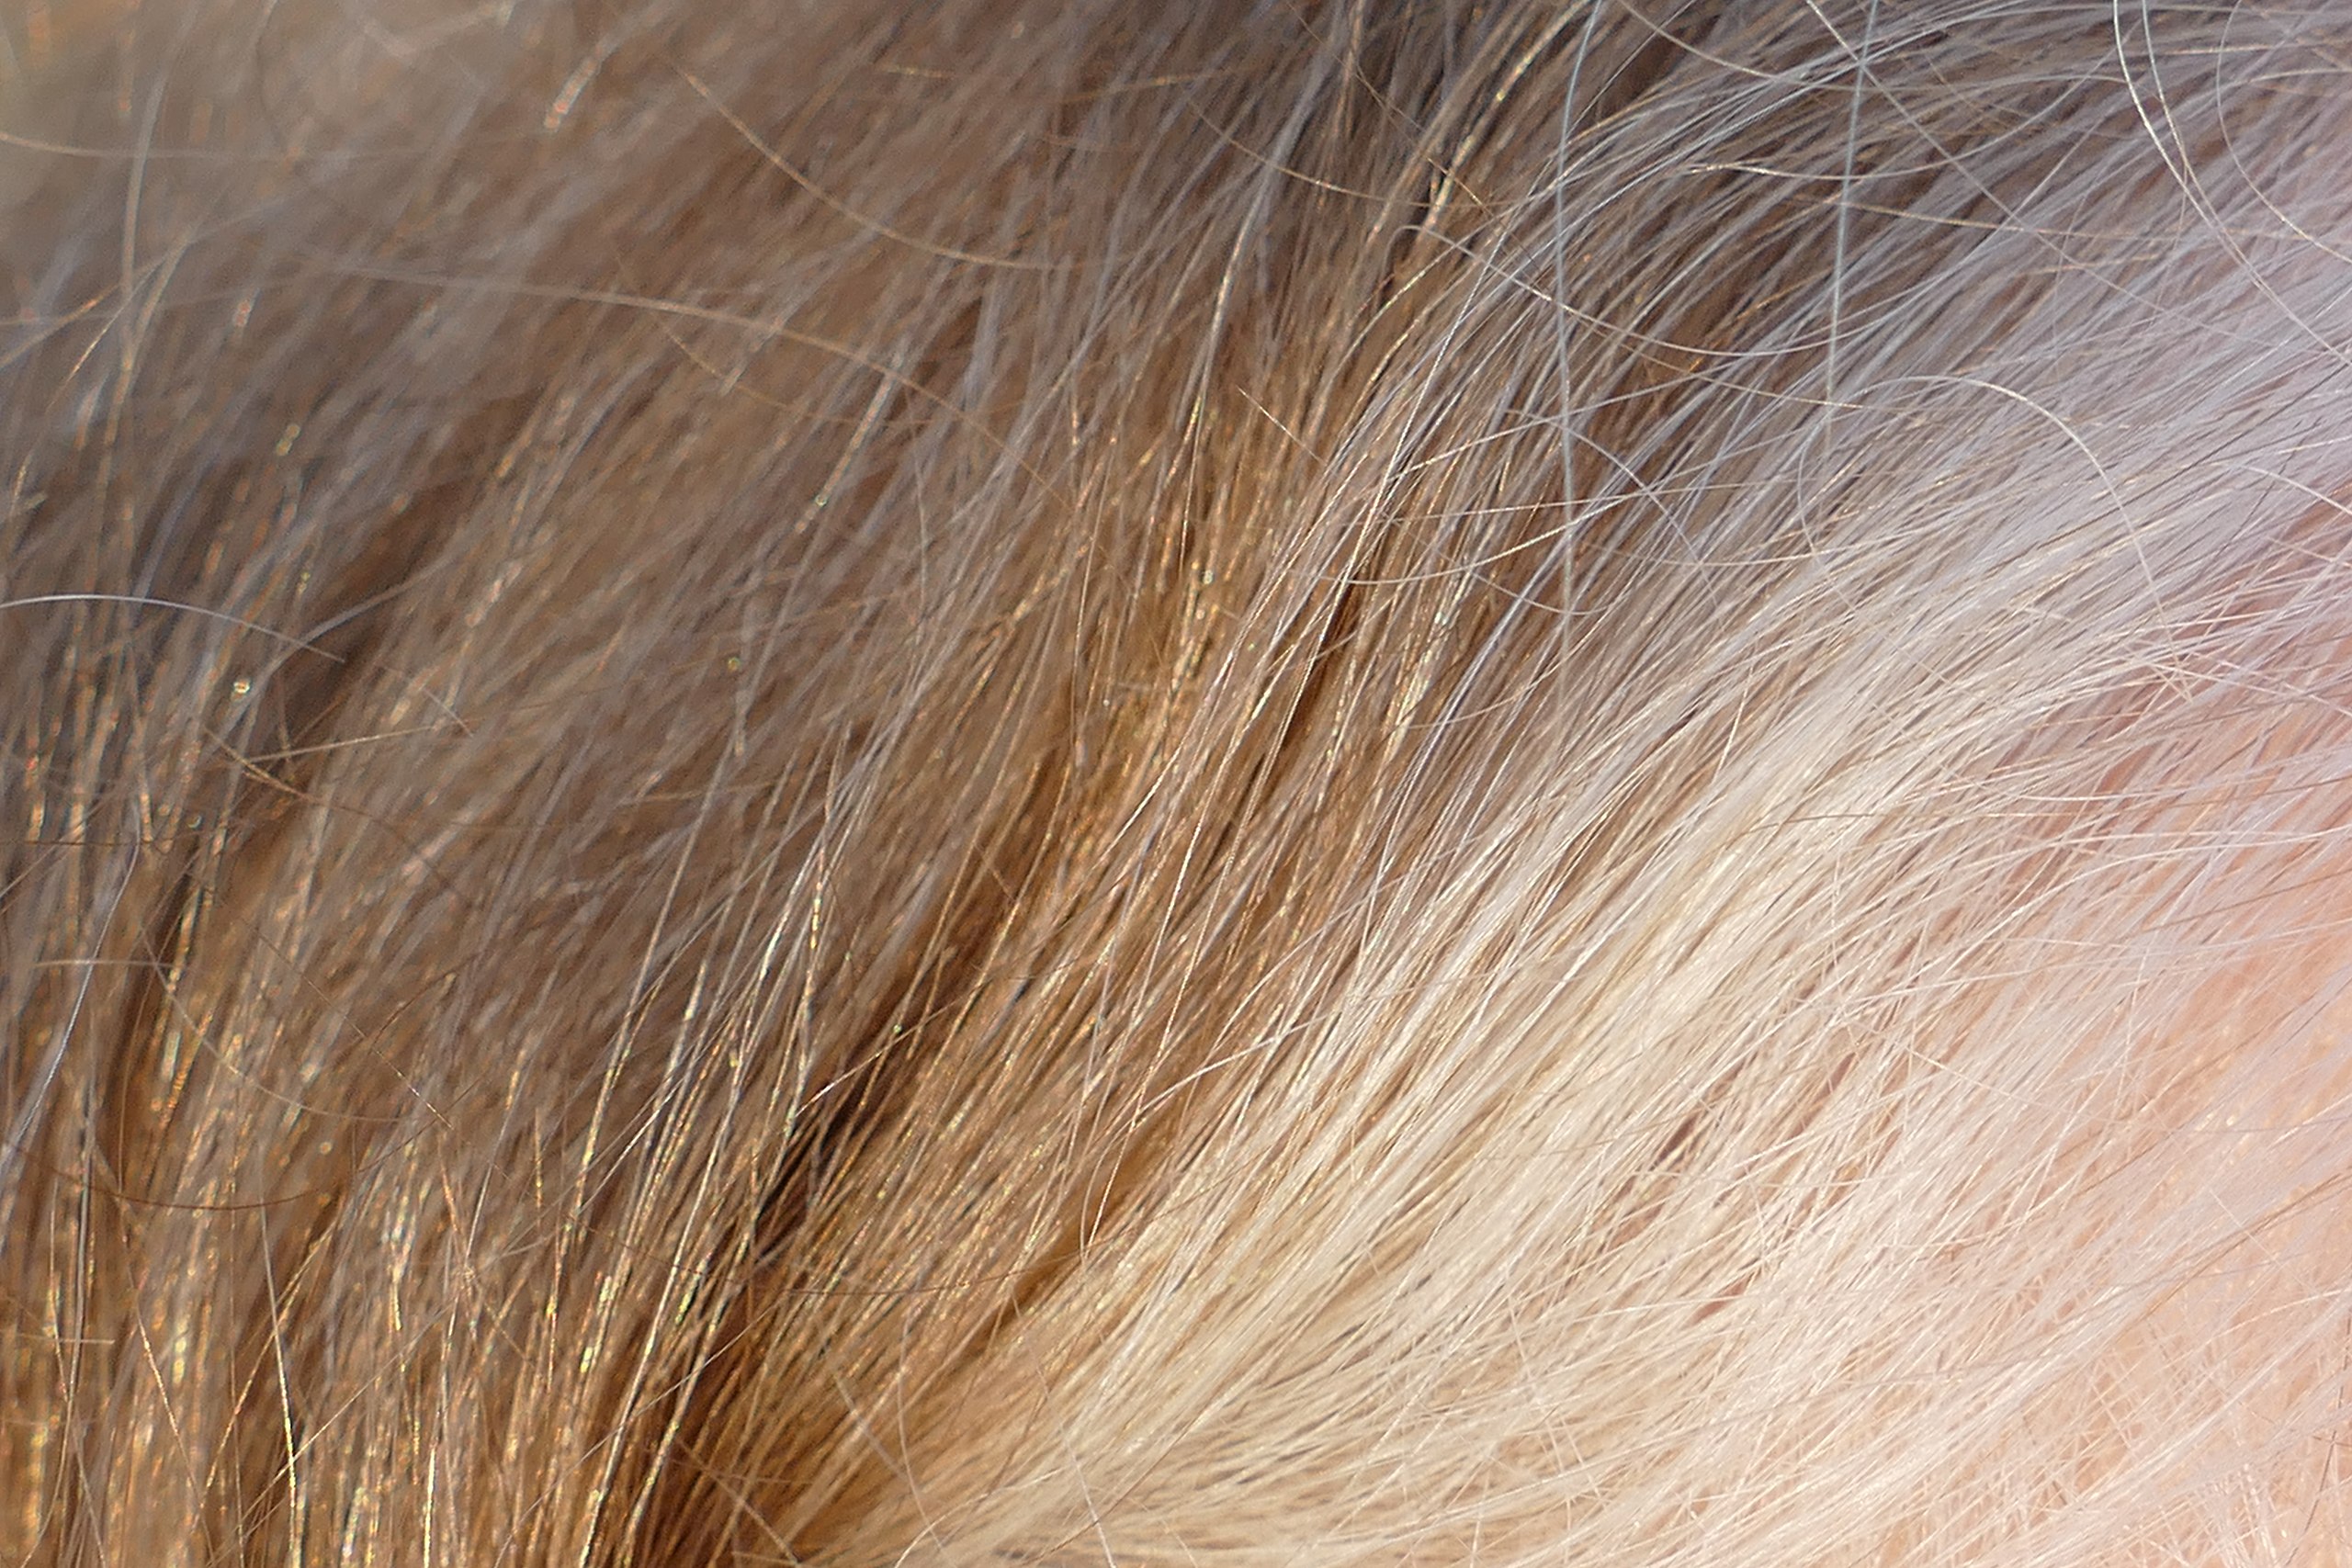 File:Blond hair going gray 02.jpg - Wikimedia Commons